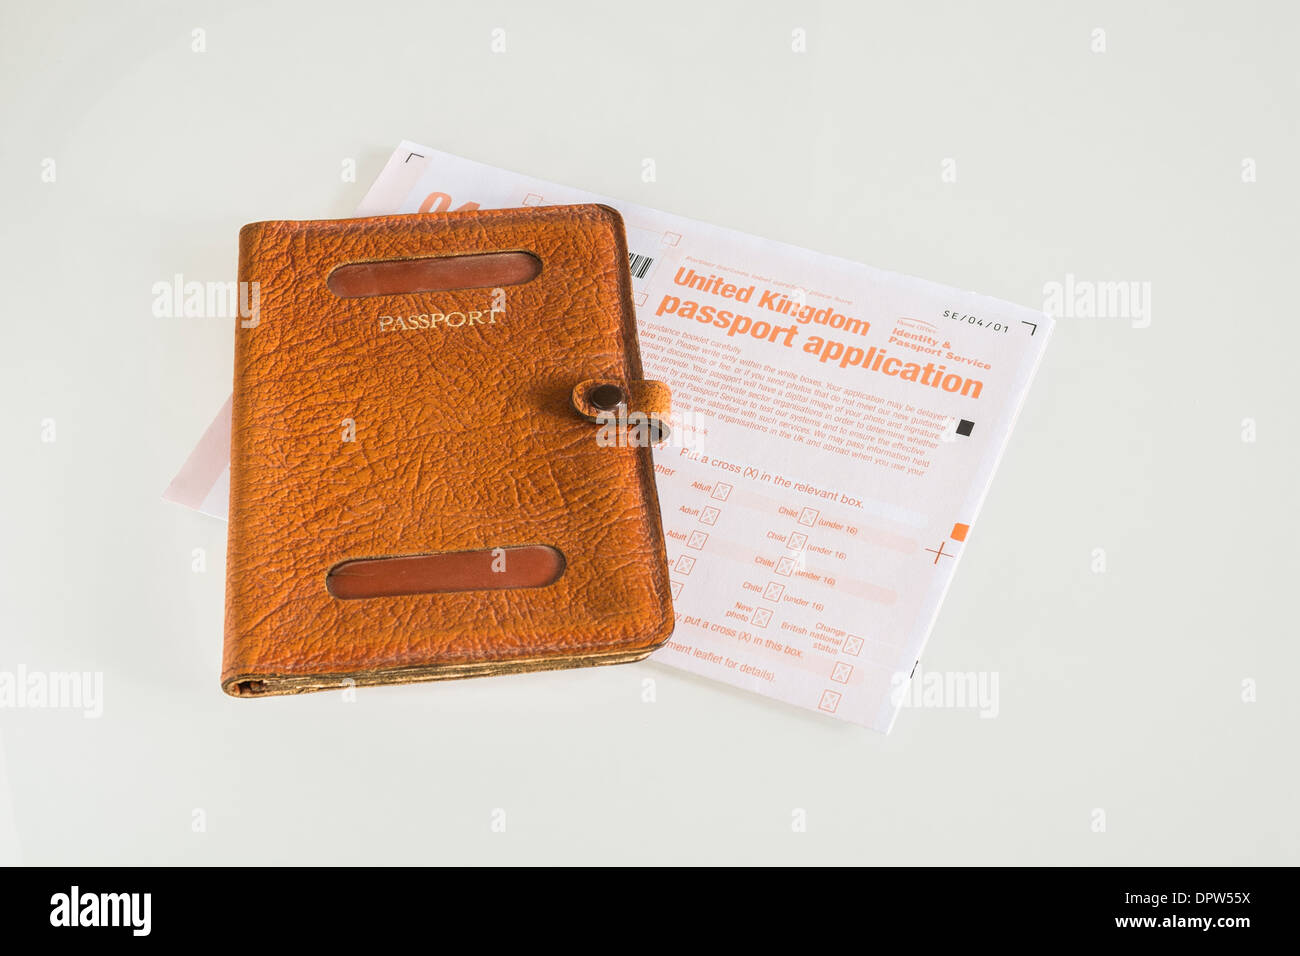 United Kingdom passport application form and empty passport holder Stock Photo